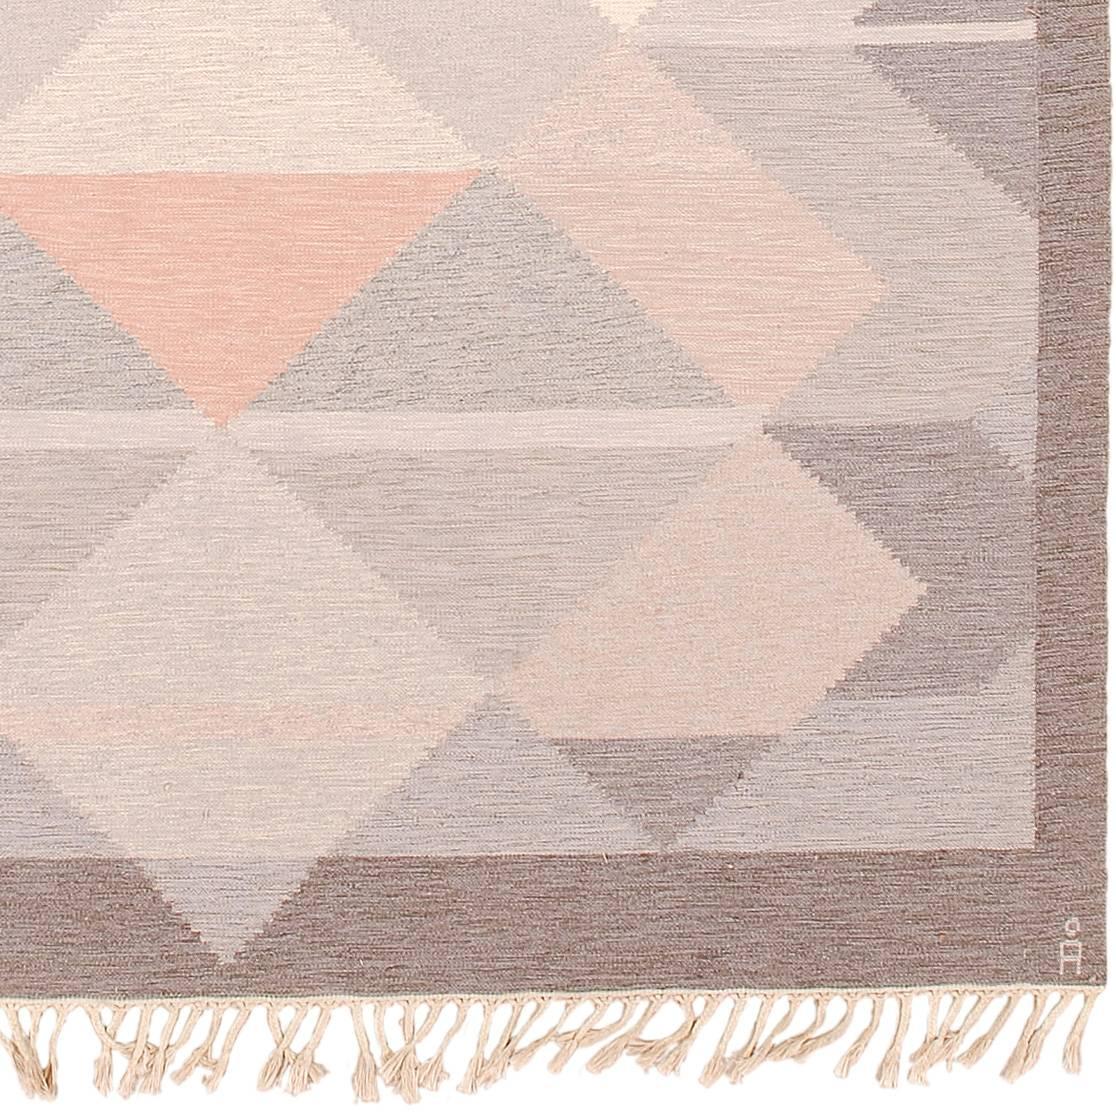 20th century Swedish flat-weave carpet, initialed 